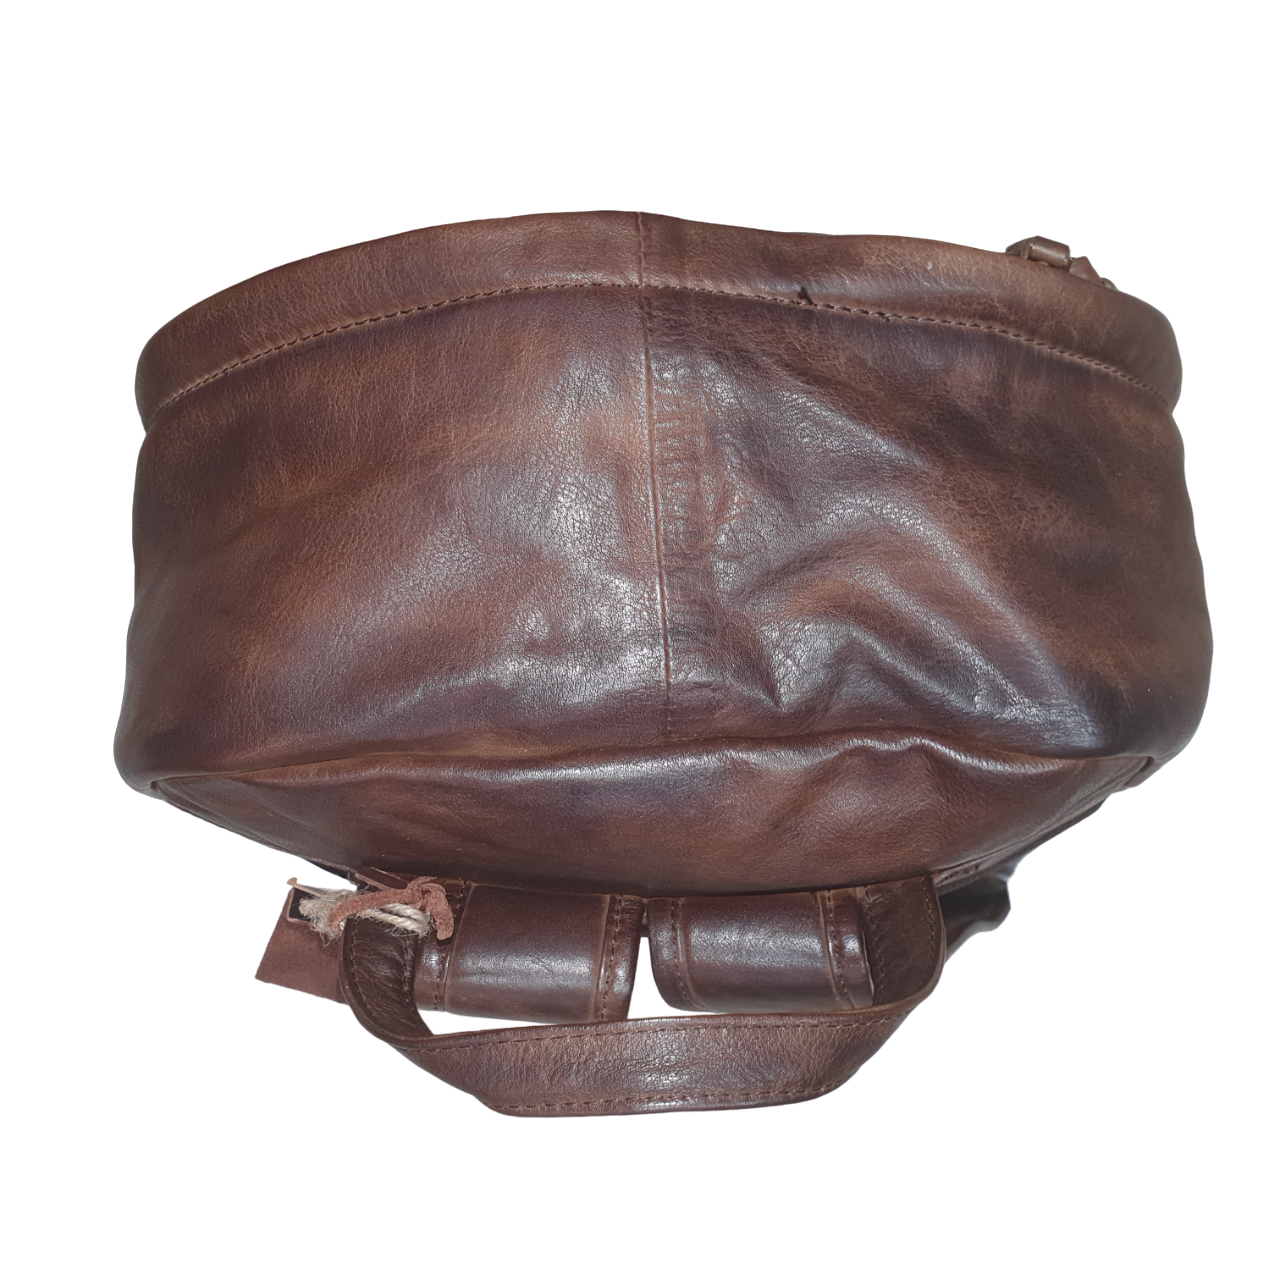 Rugged Hide - Leather Backpack RH-2623 Brussels - rainbowbags